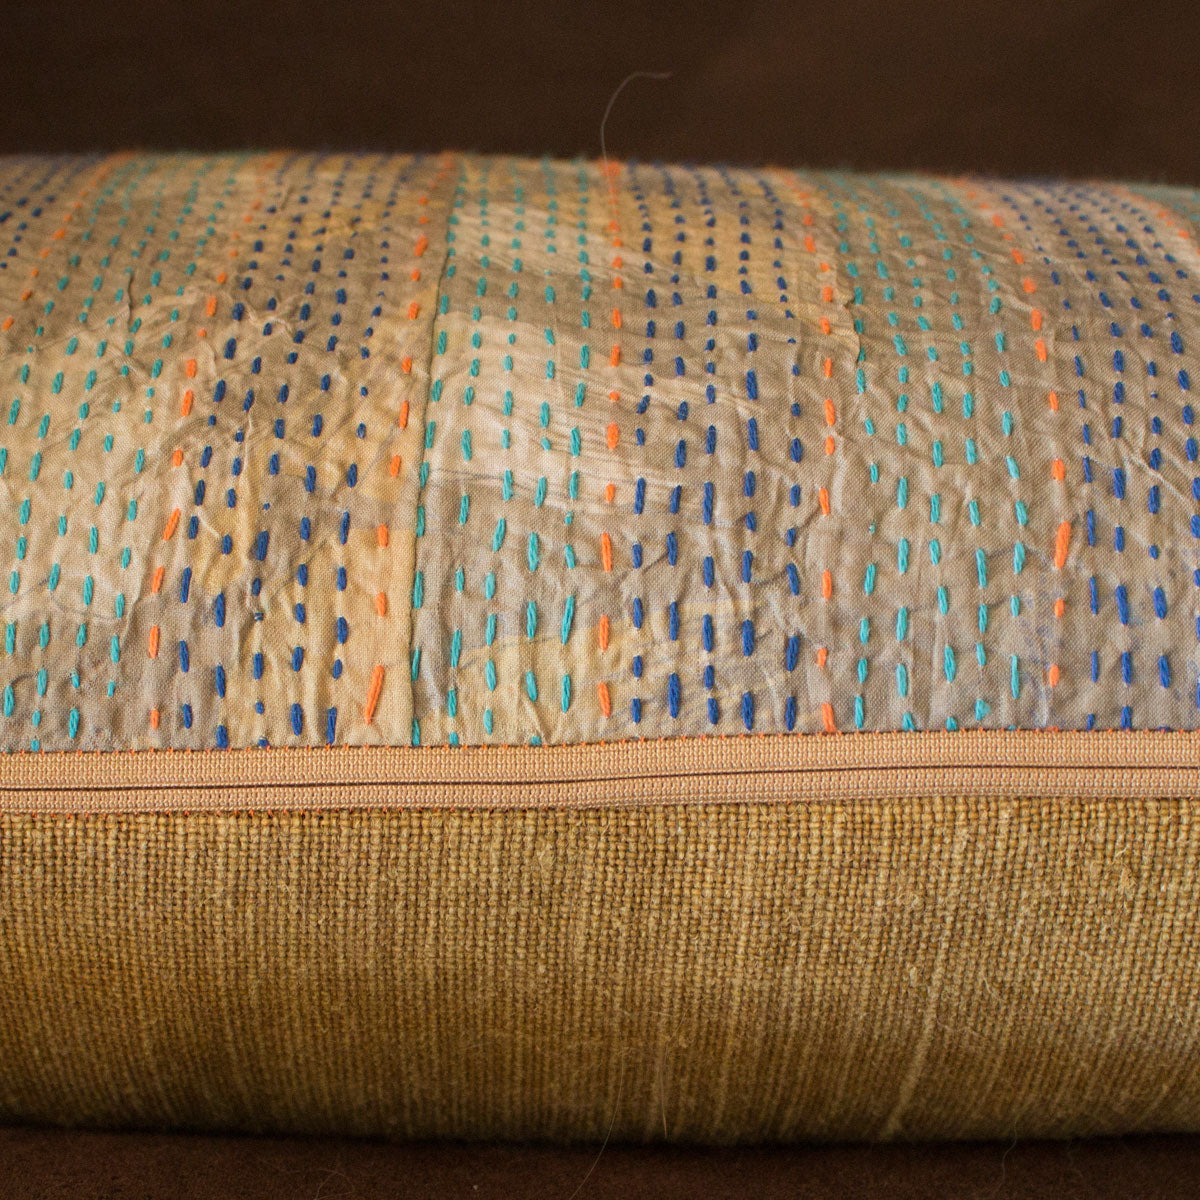 Lumbar throw pillow cover with vintage silk & linen